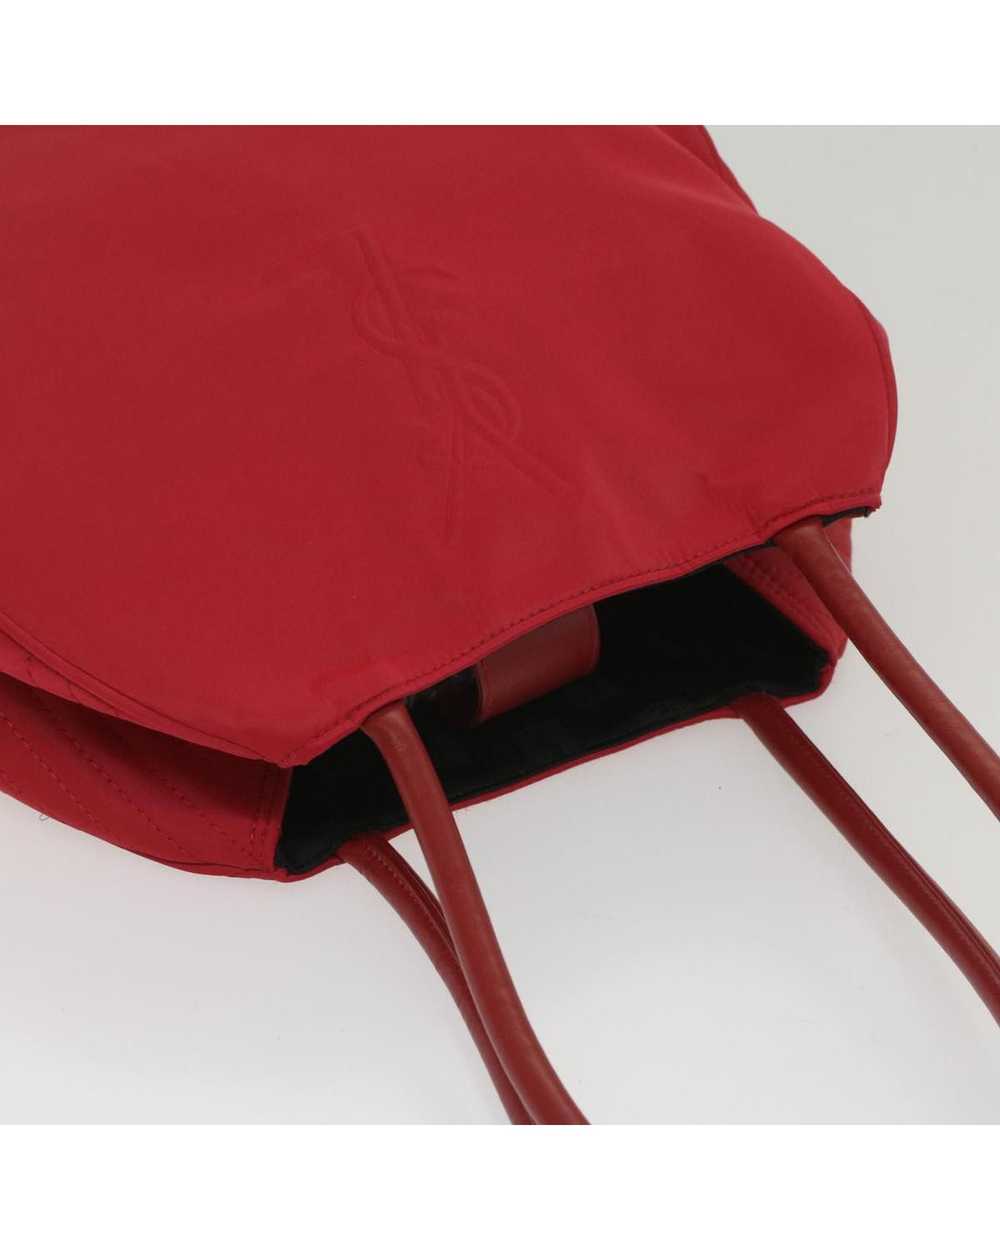 Yves Saint Laurent Red Leather Shoulder Bag with … - image 6